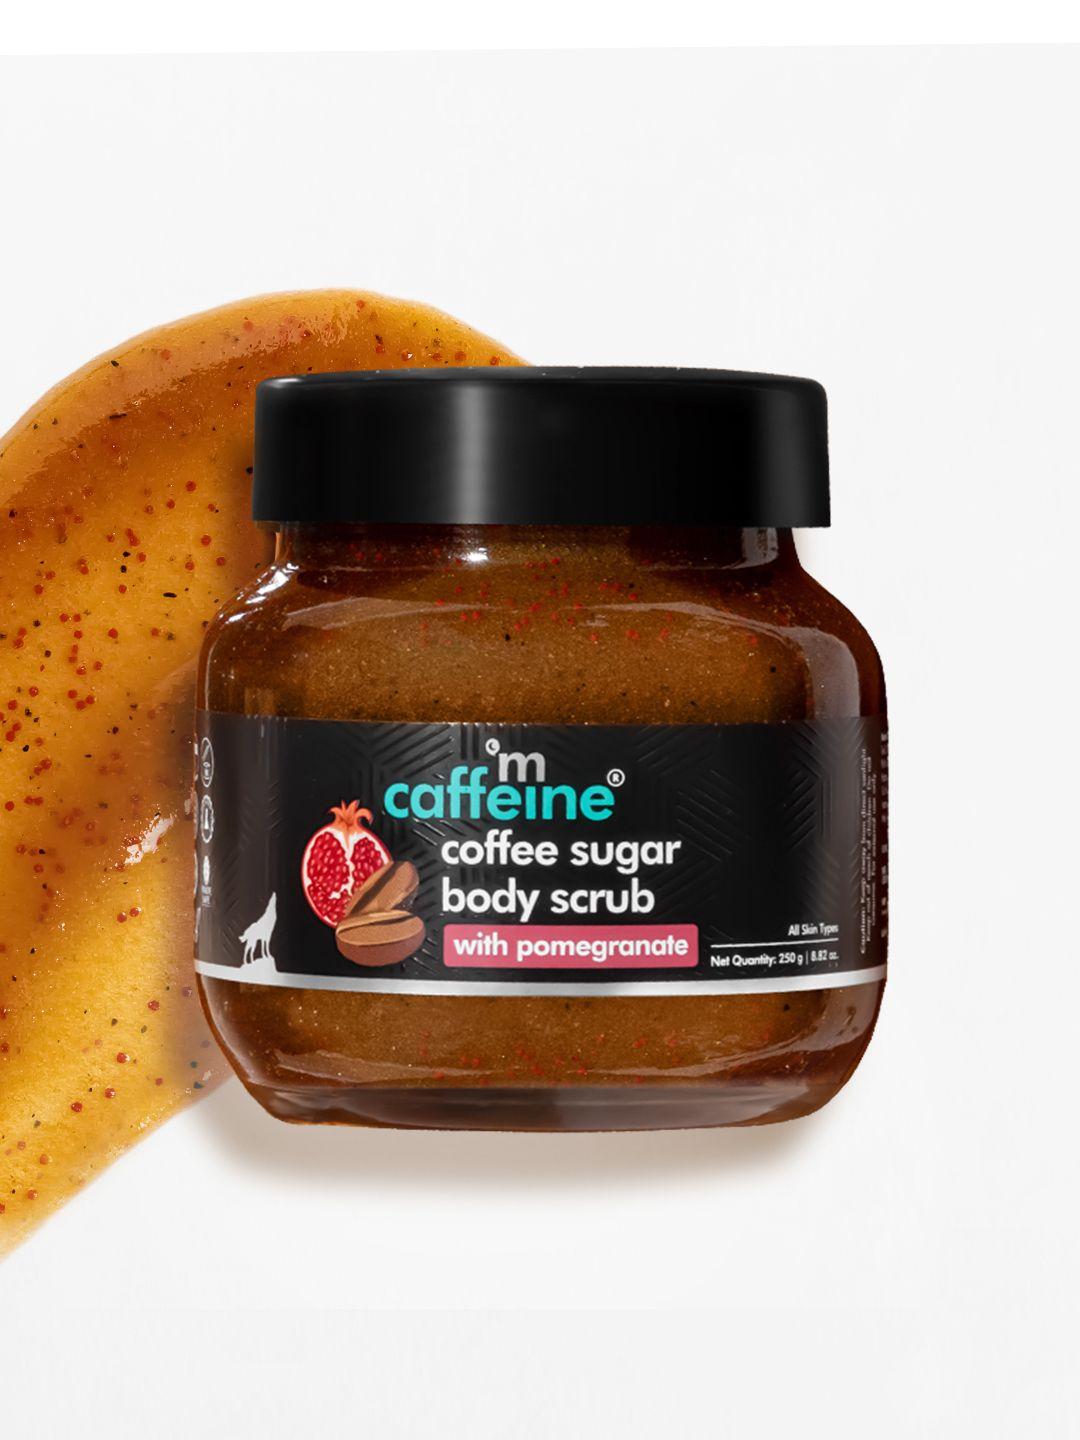 mcaffeine coffee sugar body scrub with pomegranate extracts - 250 g